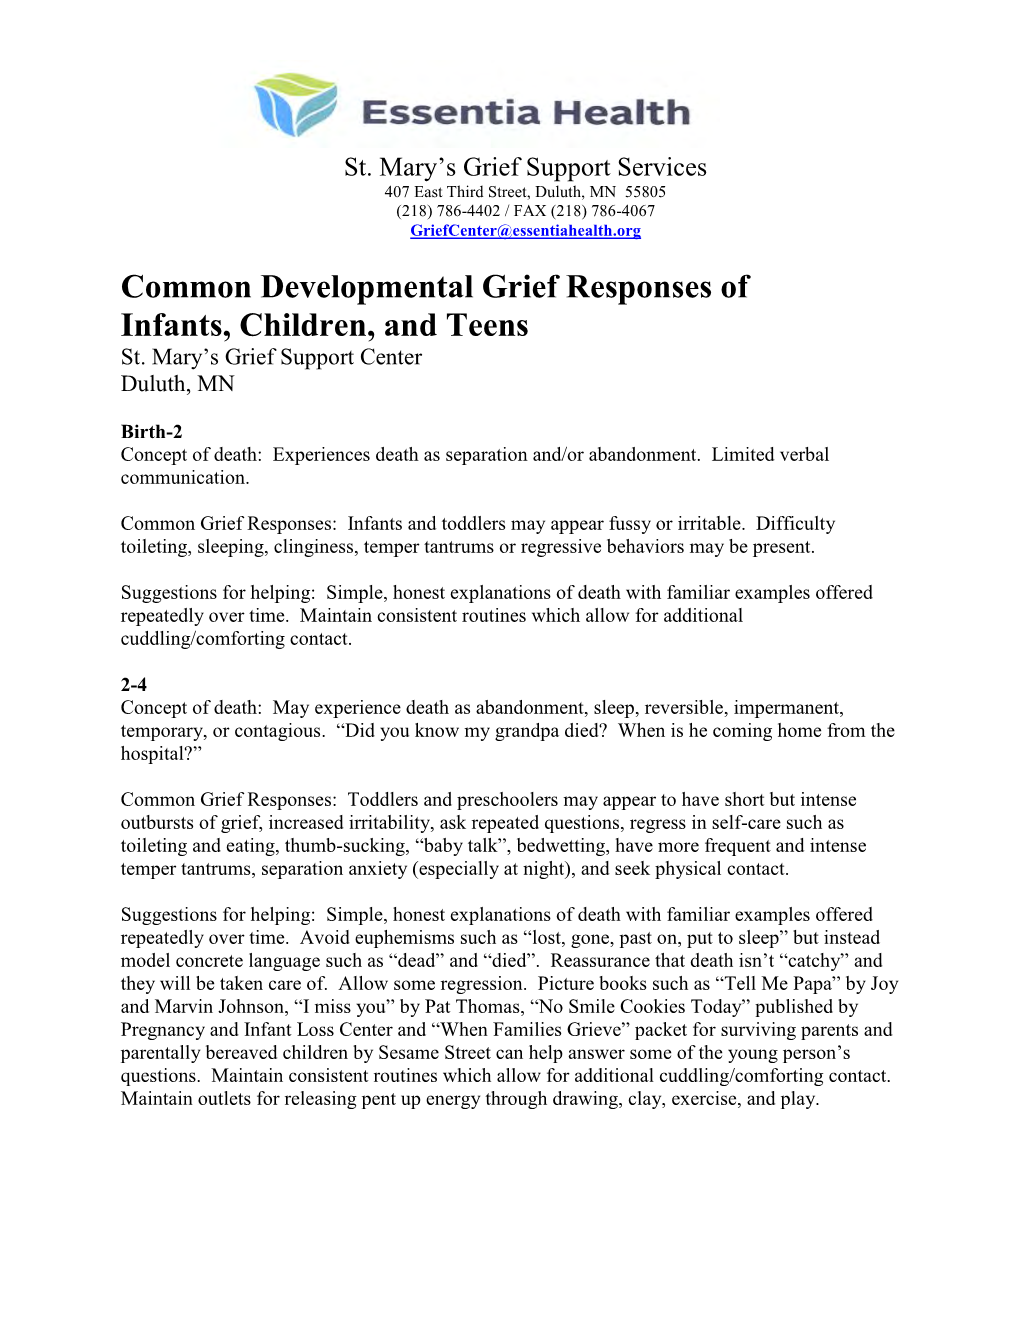 Common Developmental Grief Responses of Infants, Children, and Teens St